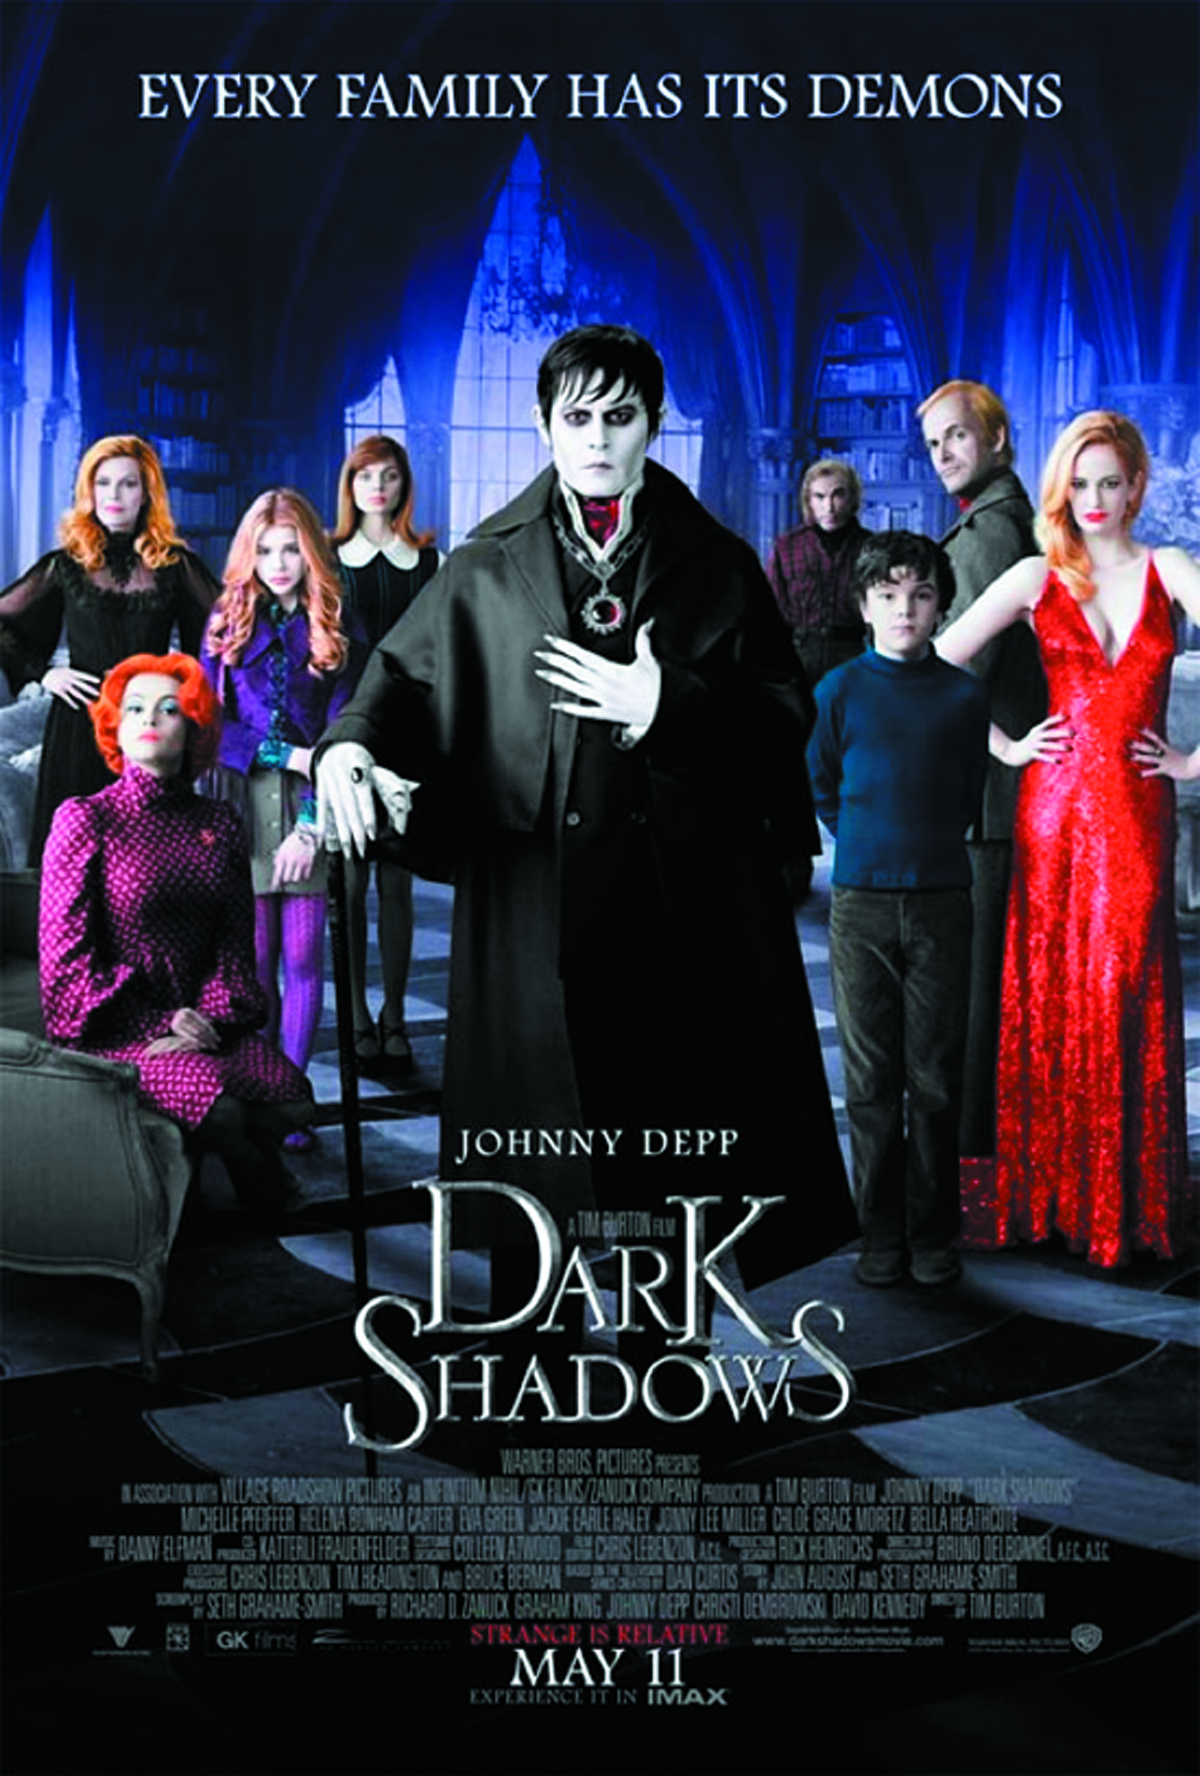 DARK SHADOWS 2012 BD + DVD